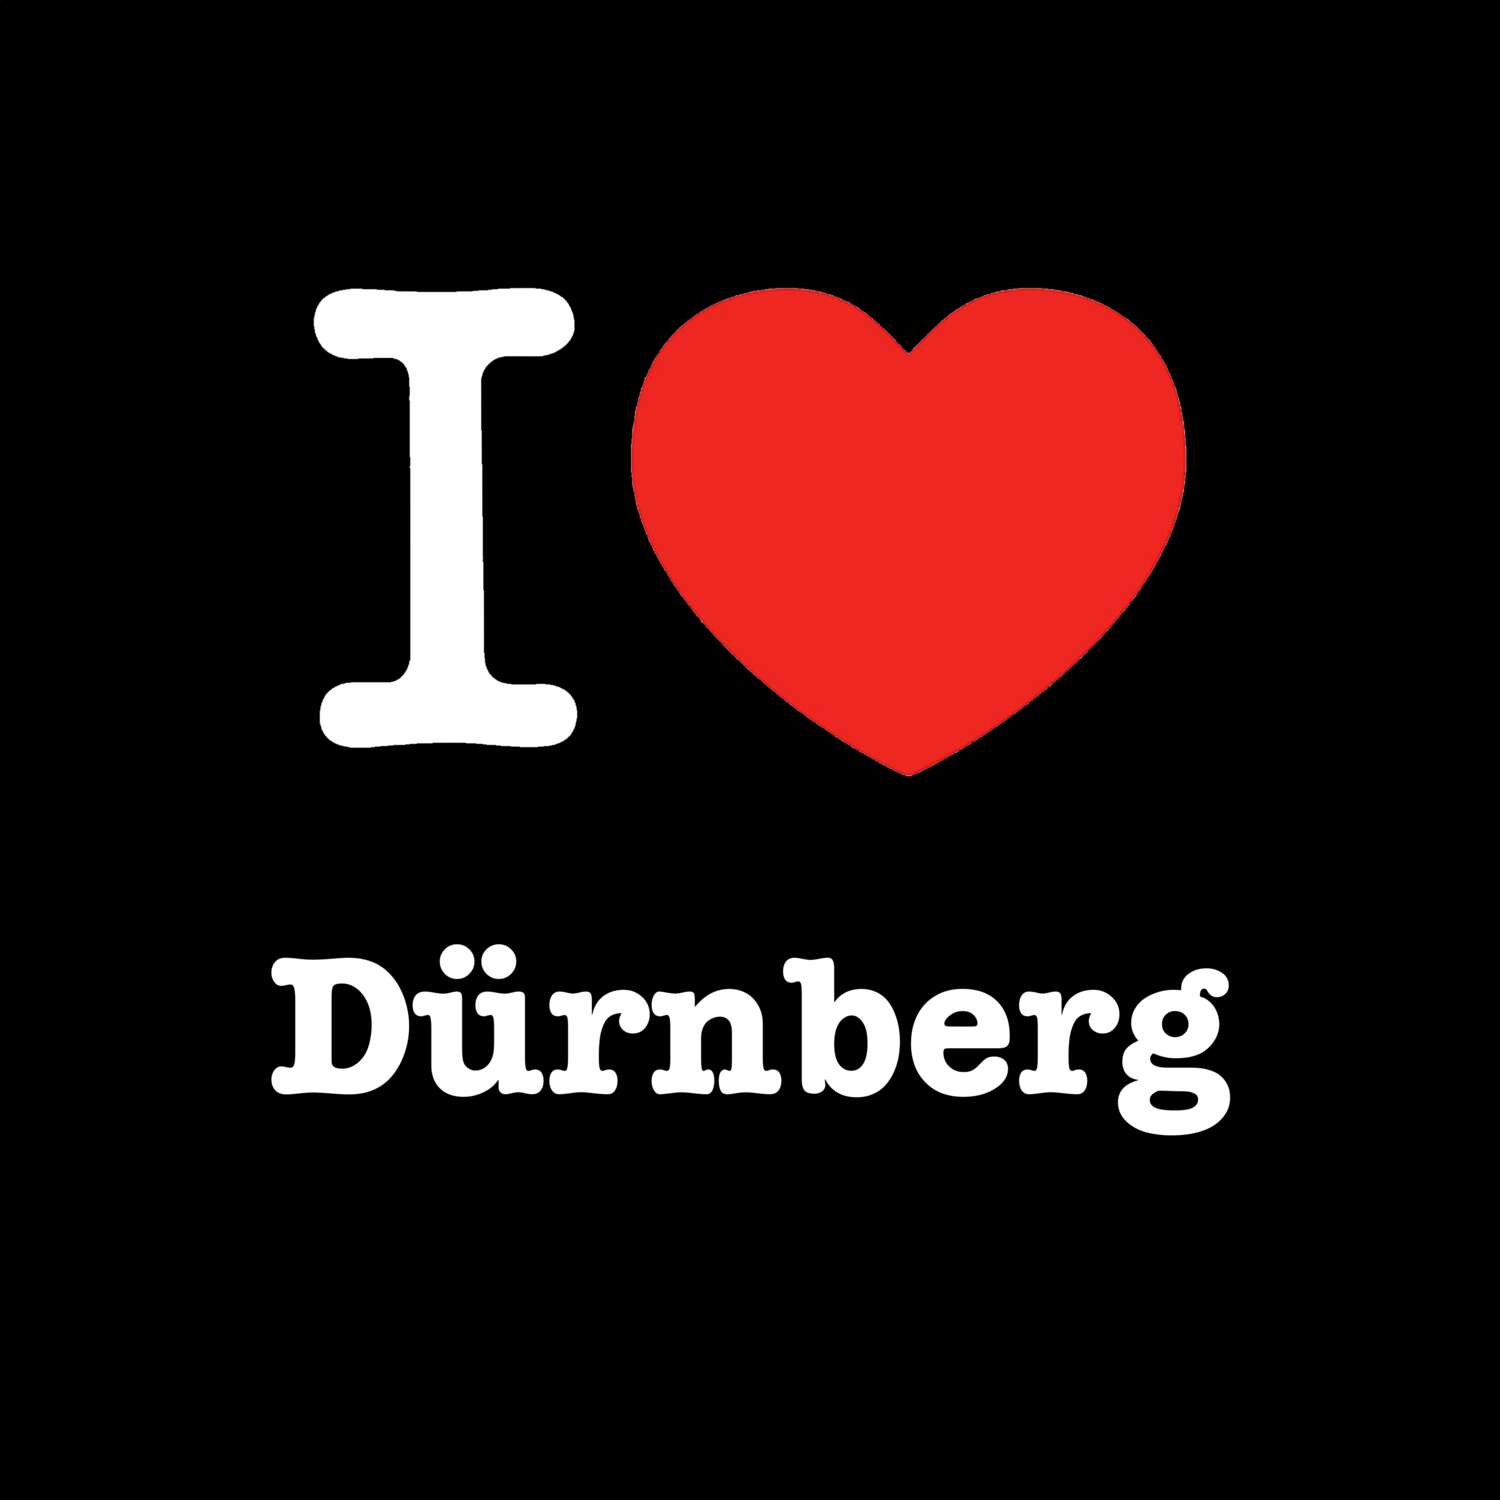 Dürnberg T-Shirt »I love«